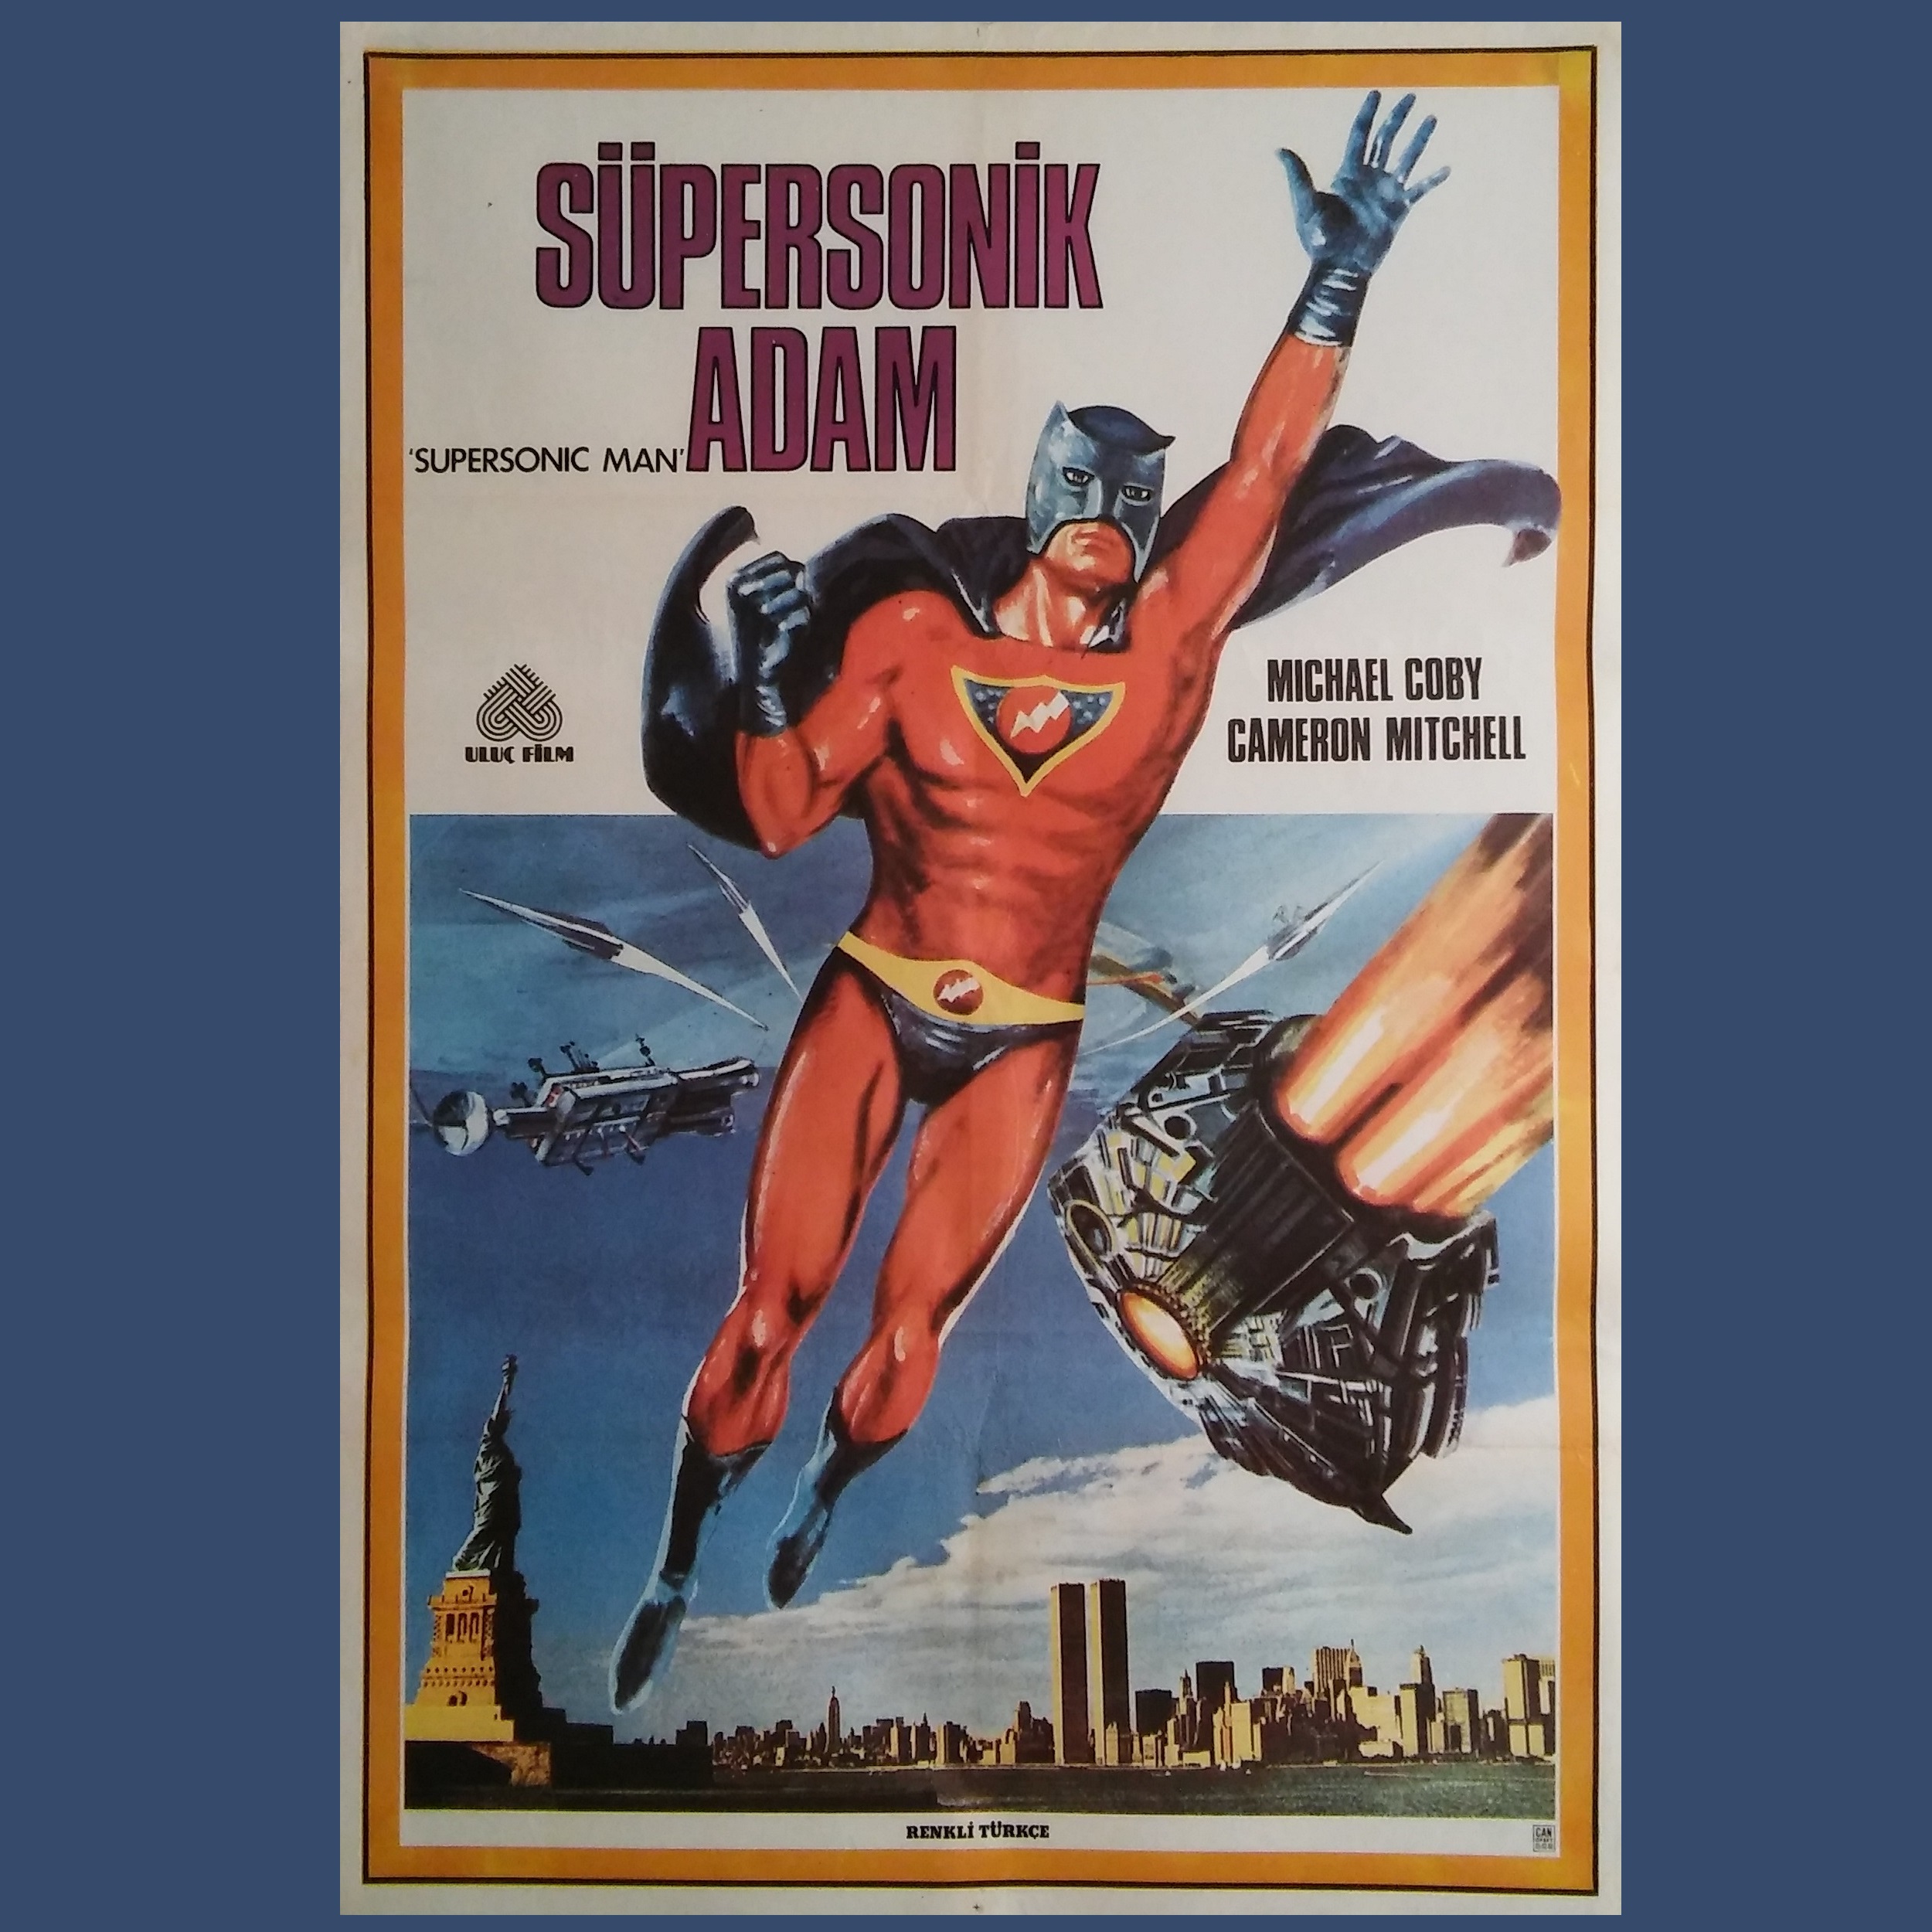 Supersonic Man (1979) Screenshot 3 